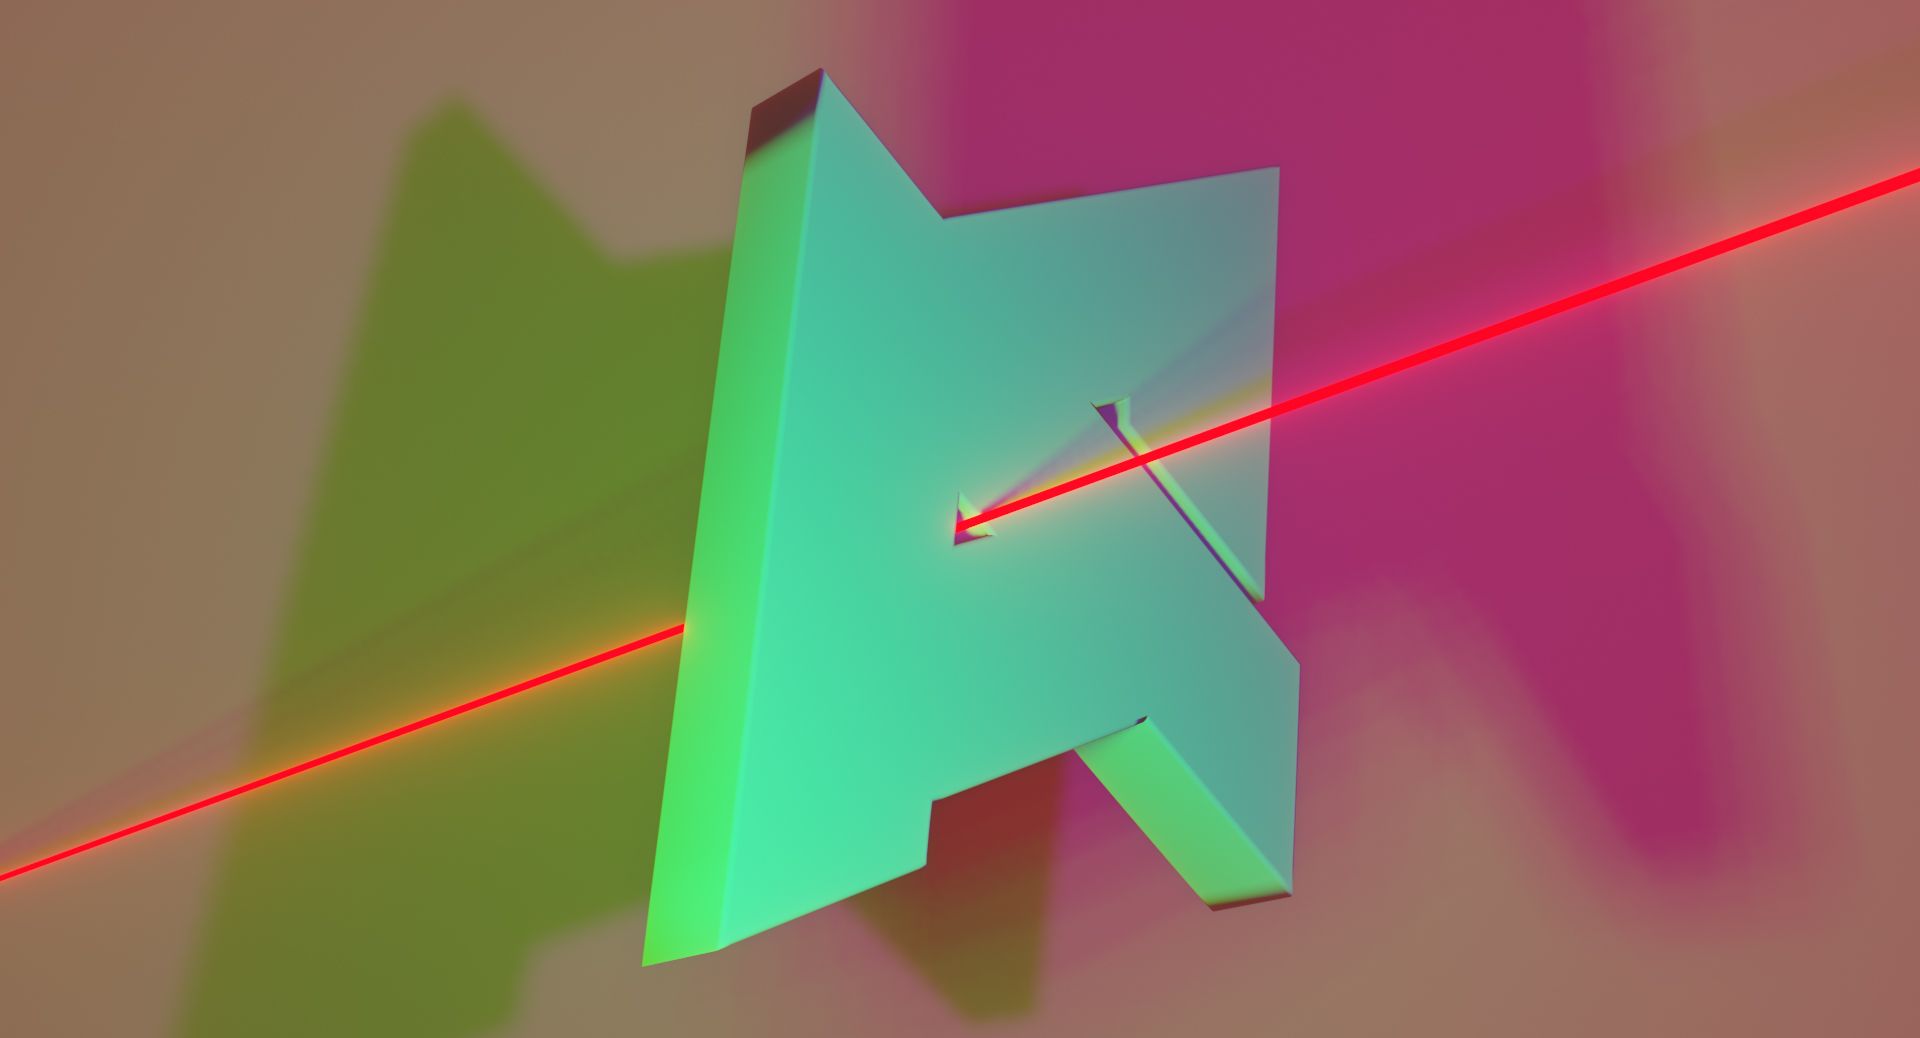 3D AP logo illuminated in a virtual scene